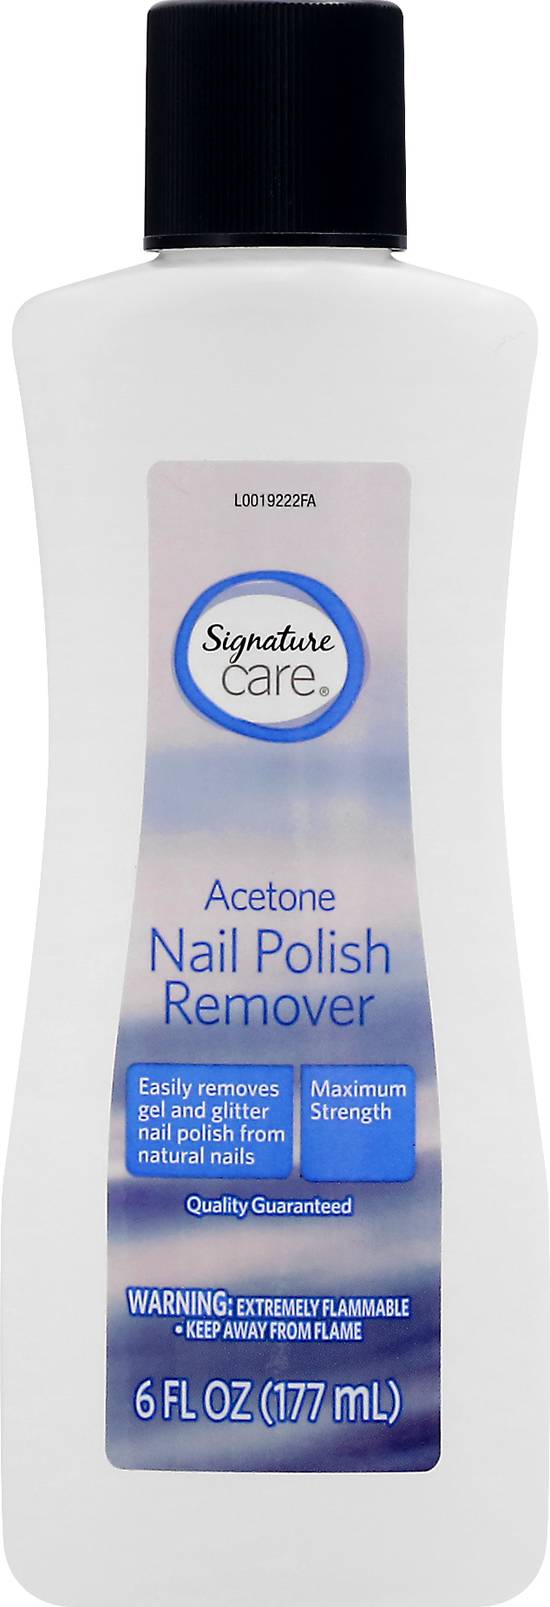 Signature Care Acetone Nail Polish Remover (6 fl oz)